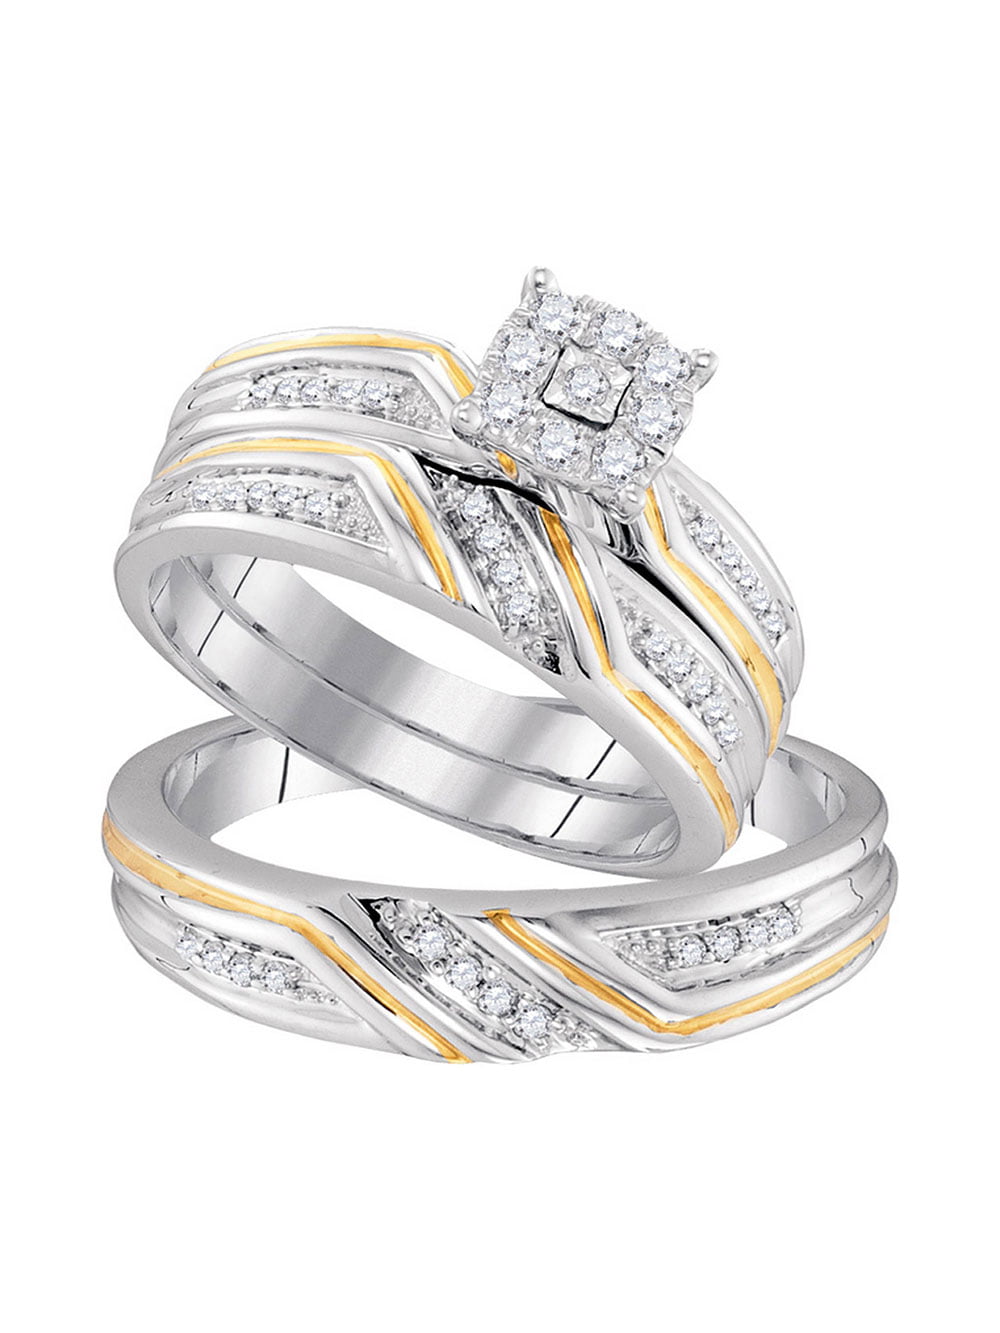 10K Yellow Gold Silver 2 Piece Bridal Rings Wedding Engagement Band Simu Diamond 